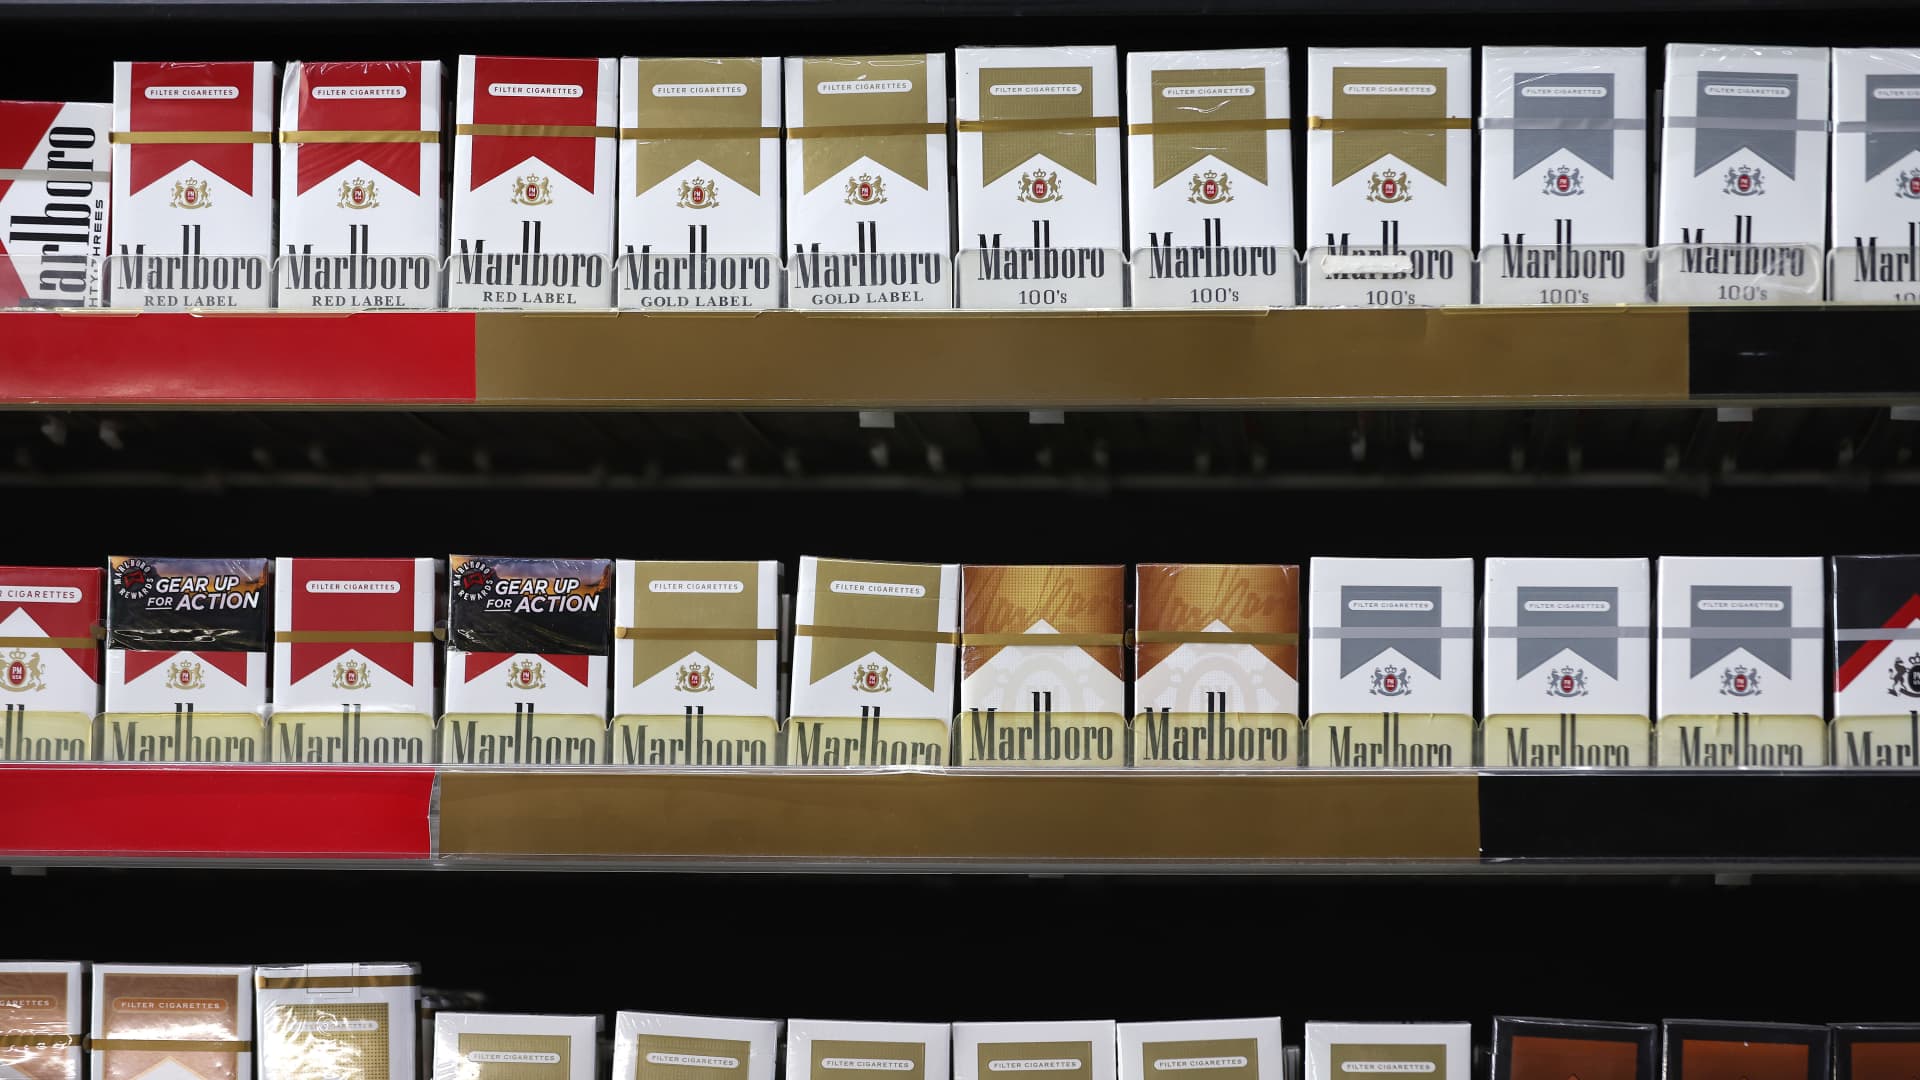 Marlboro maker Altria’s bet on smoke-free products